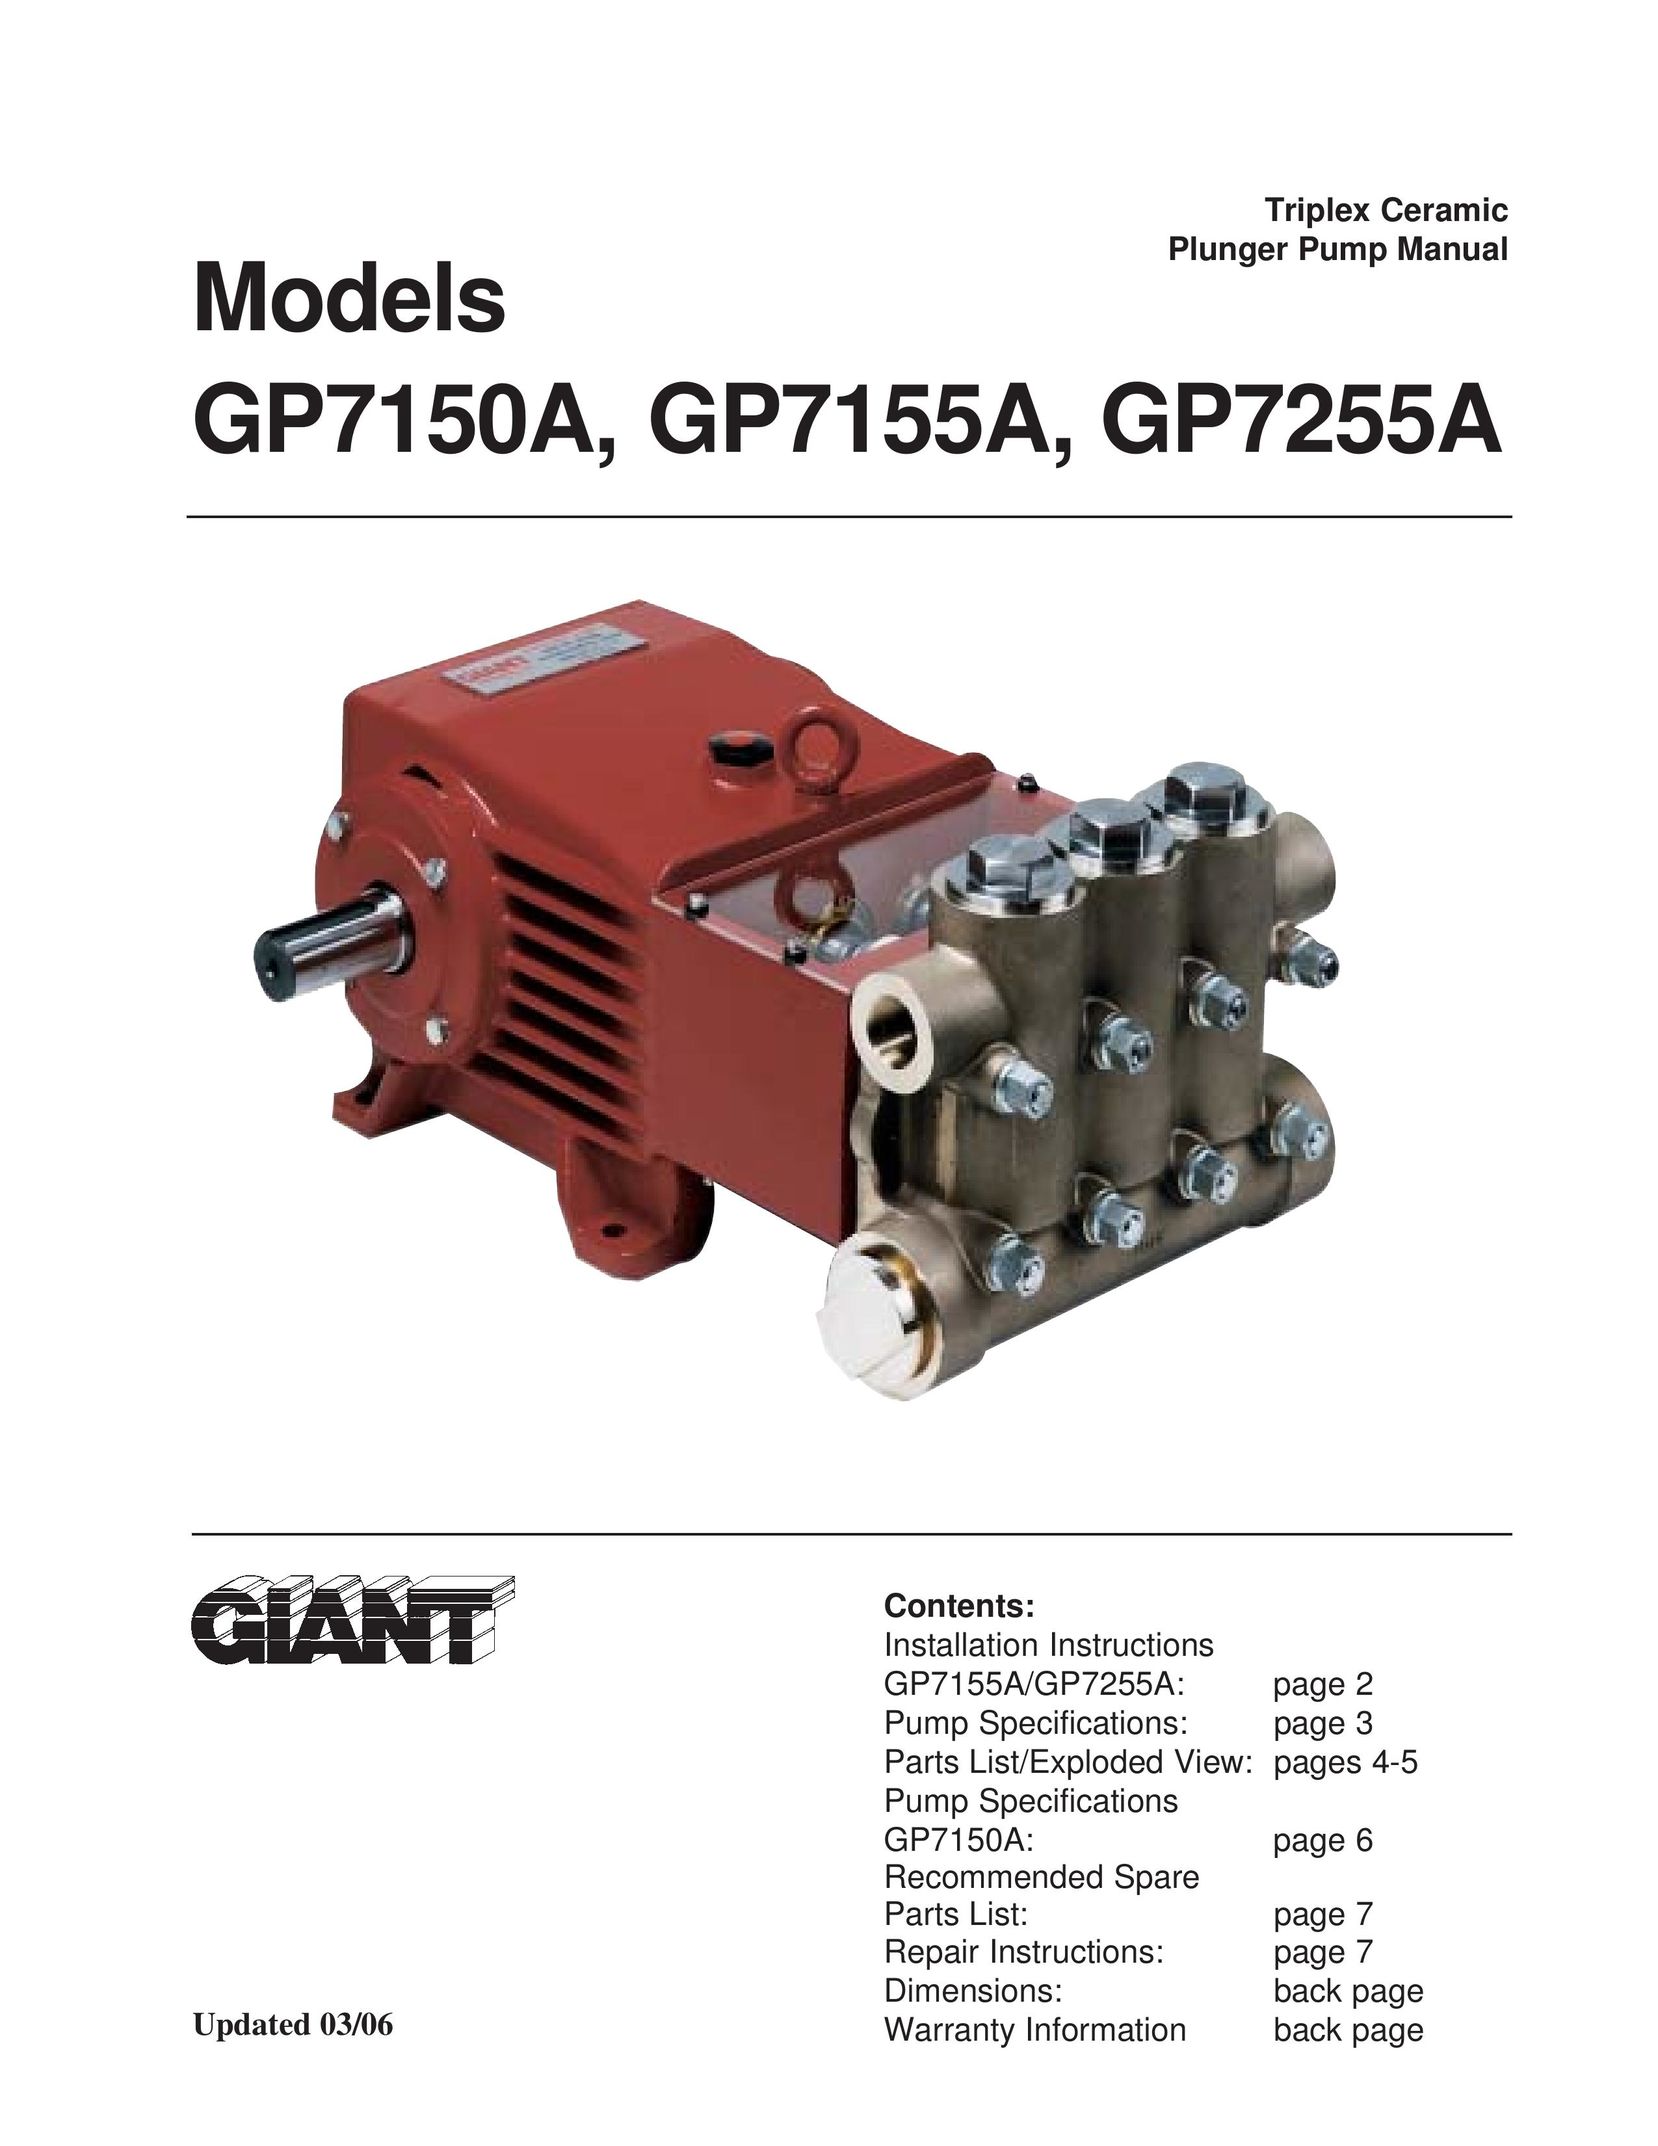 Giant GP7155A Water Pump User Manual